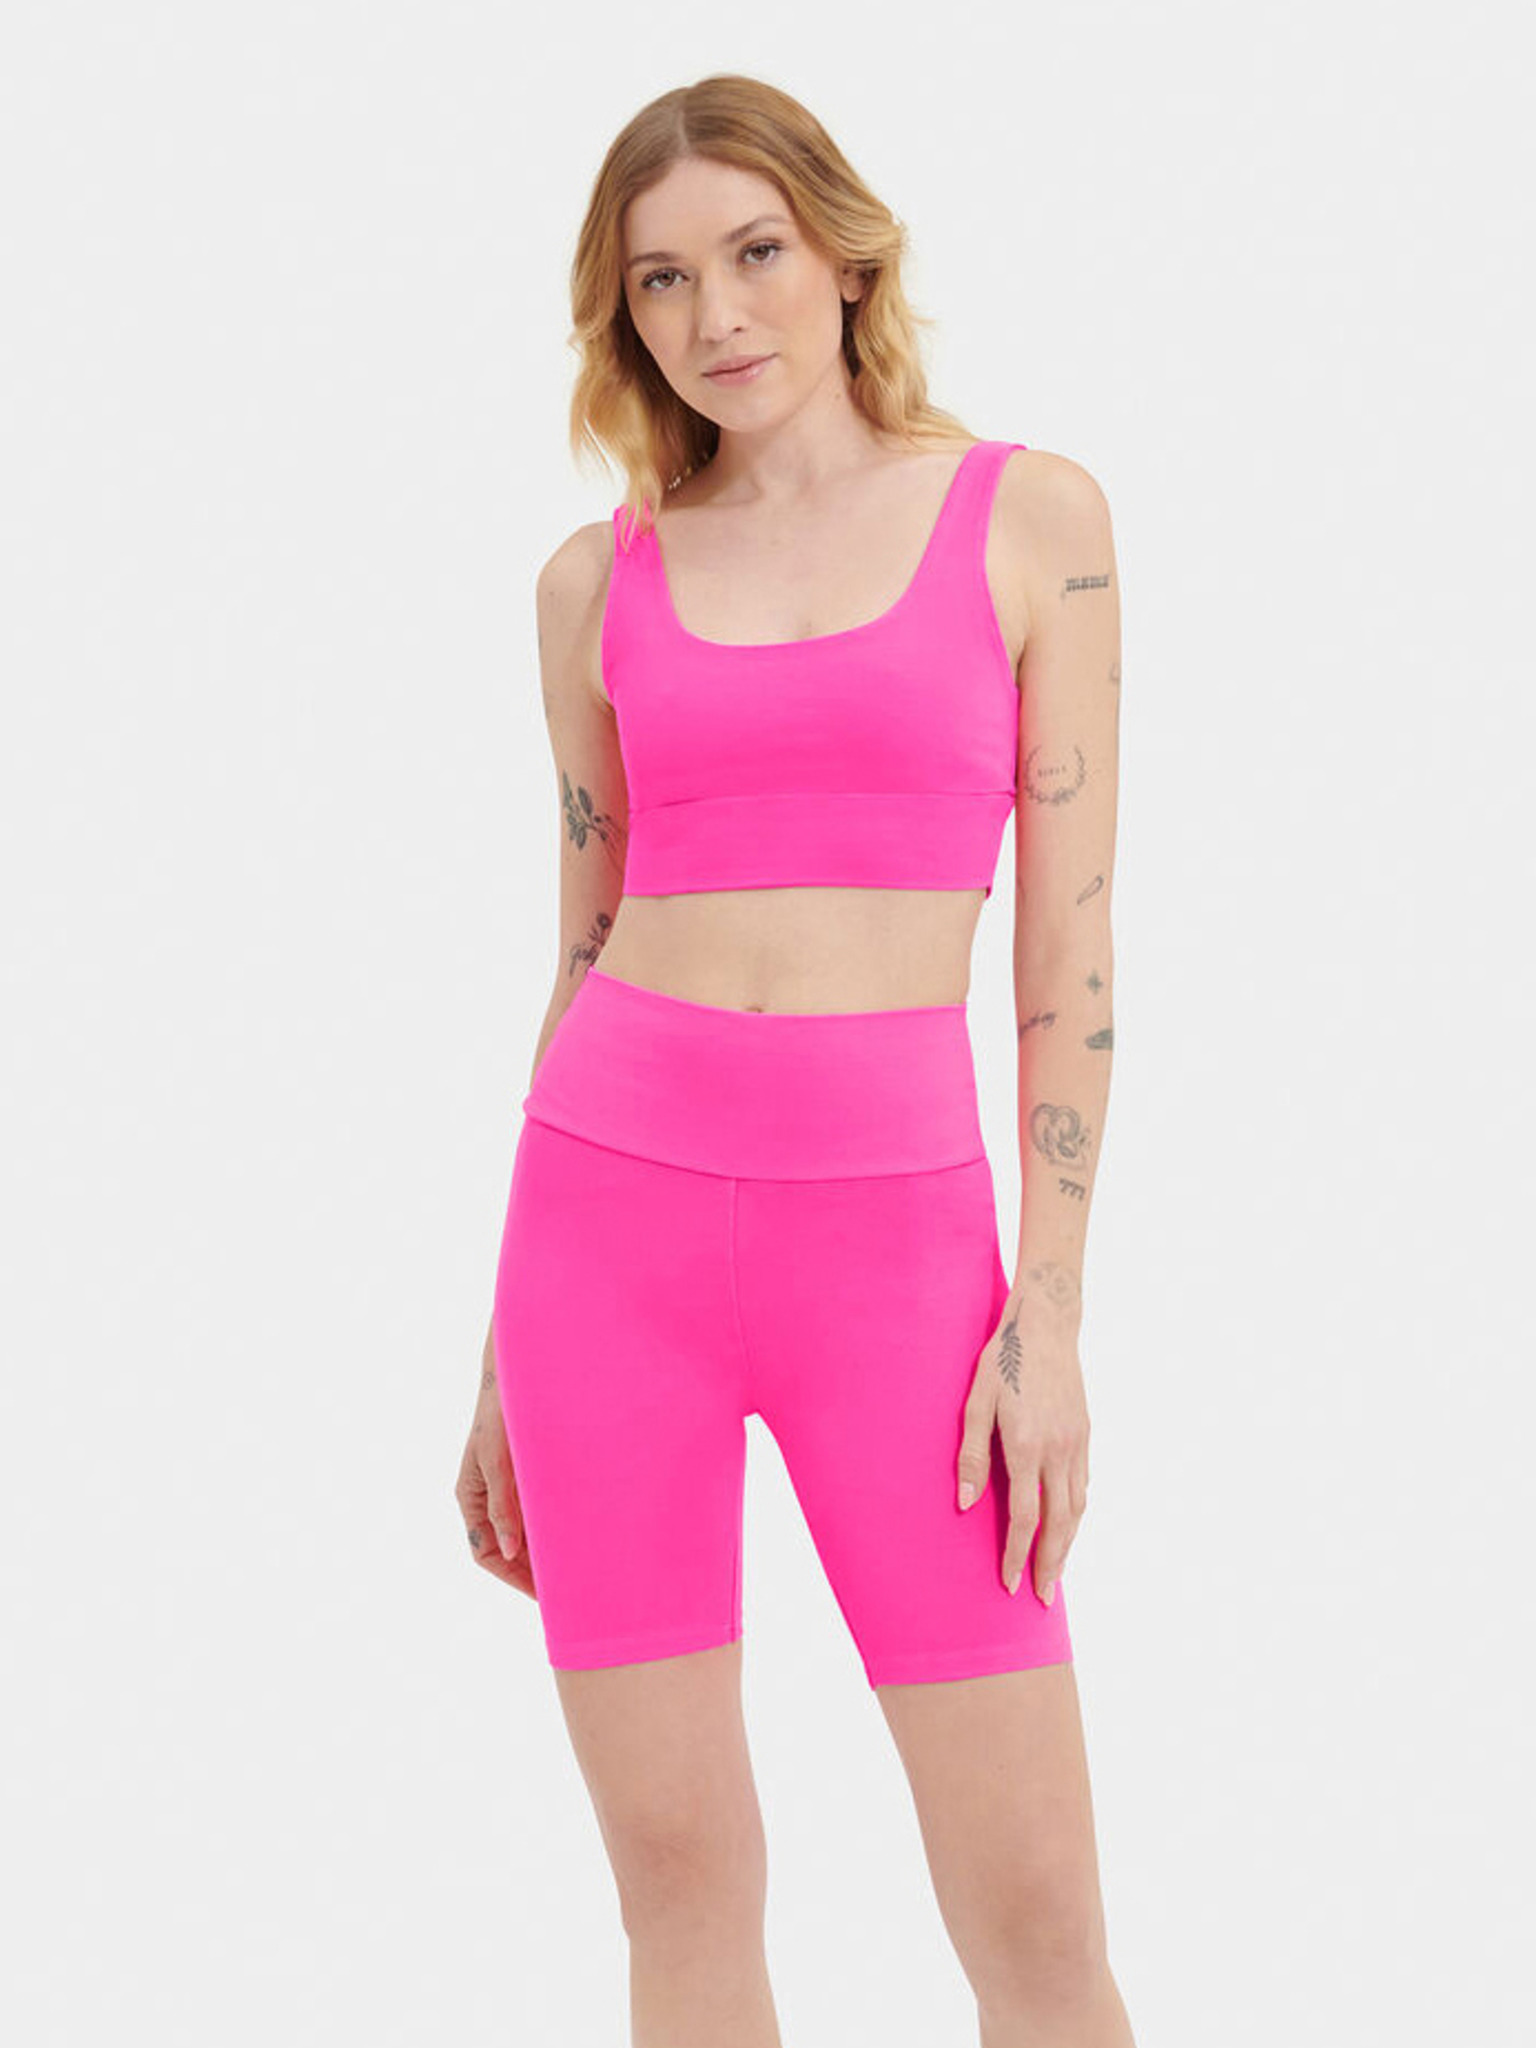 Hot Pink Sports Bra – Markelle The Gazelle